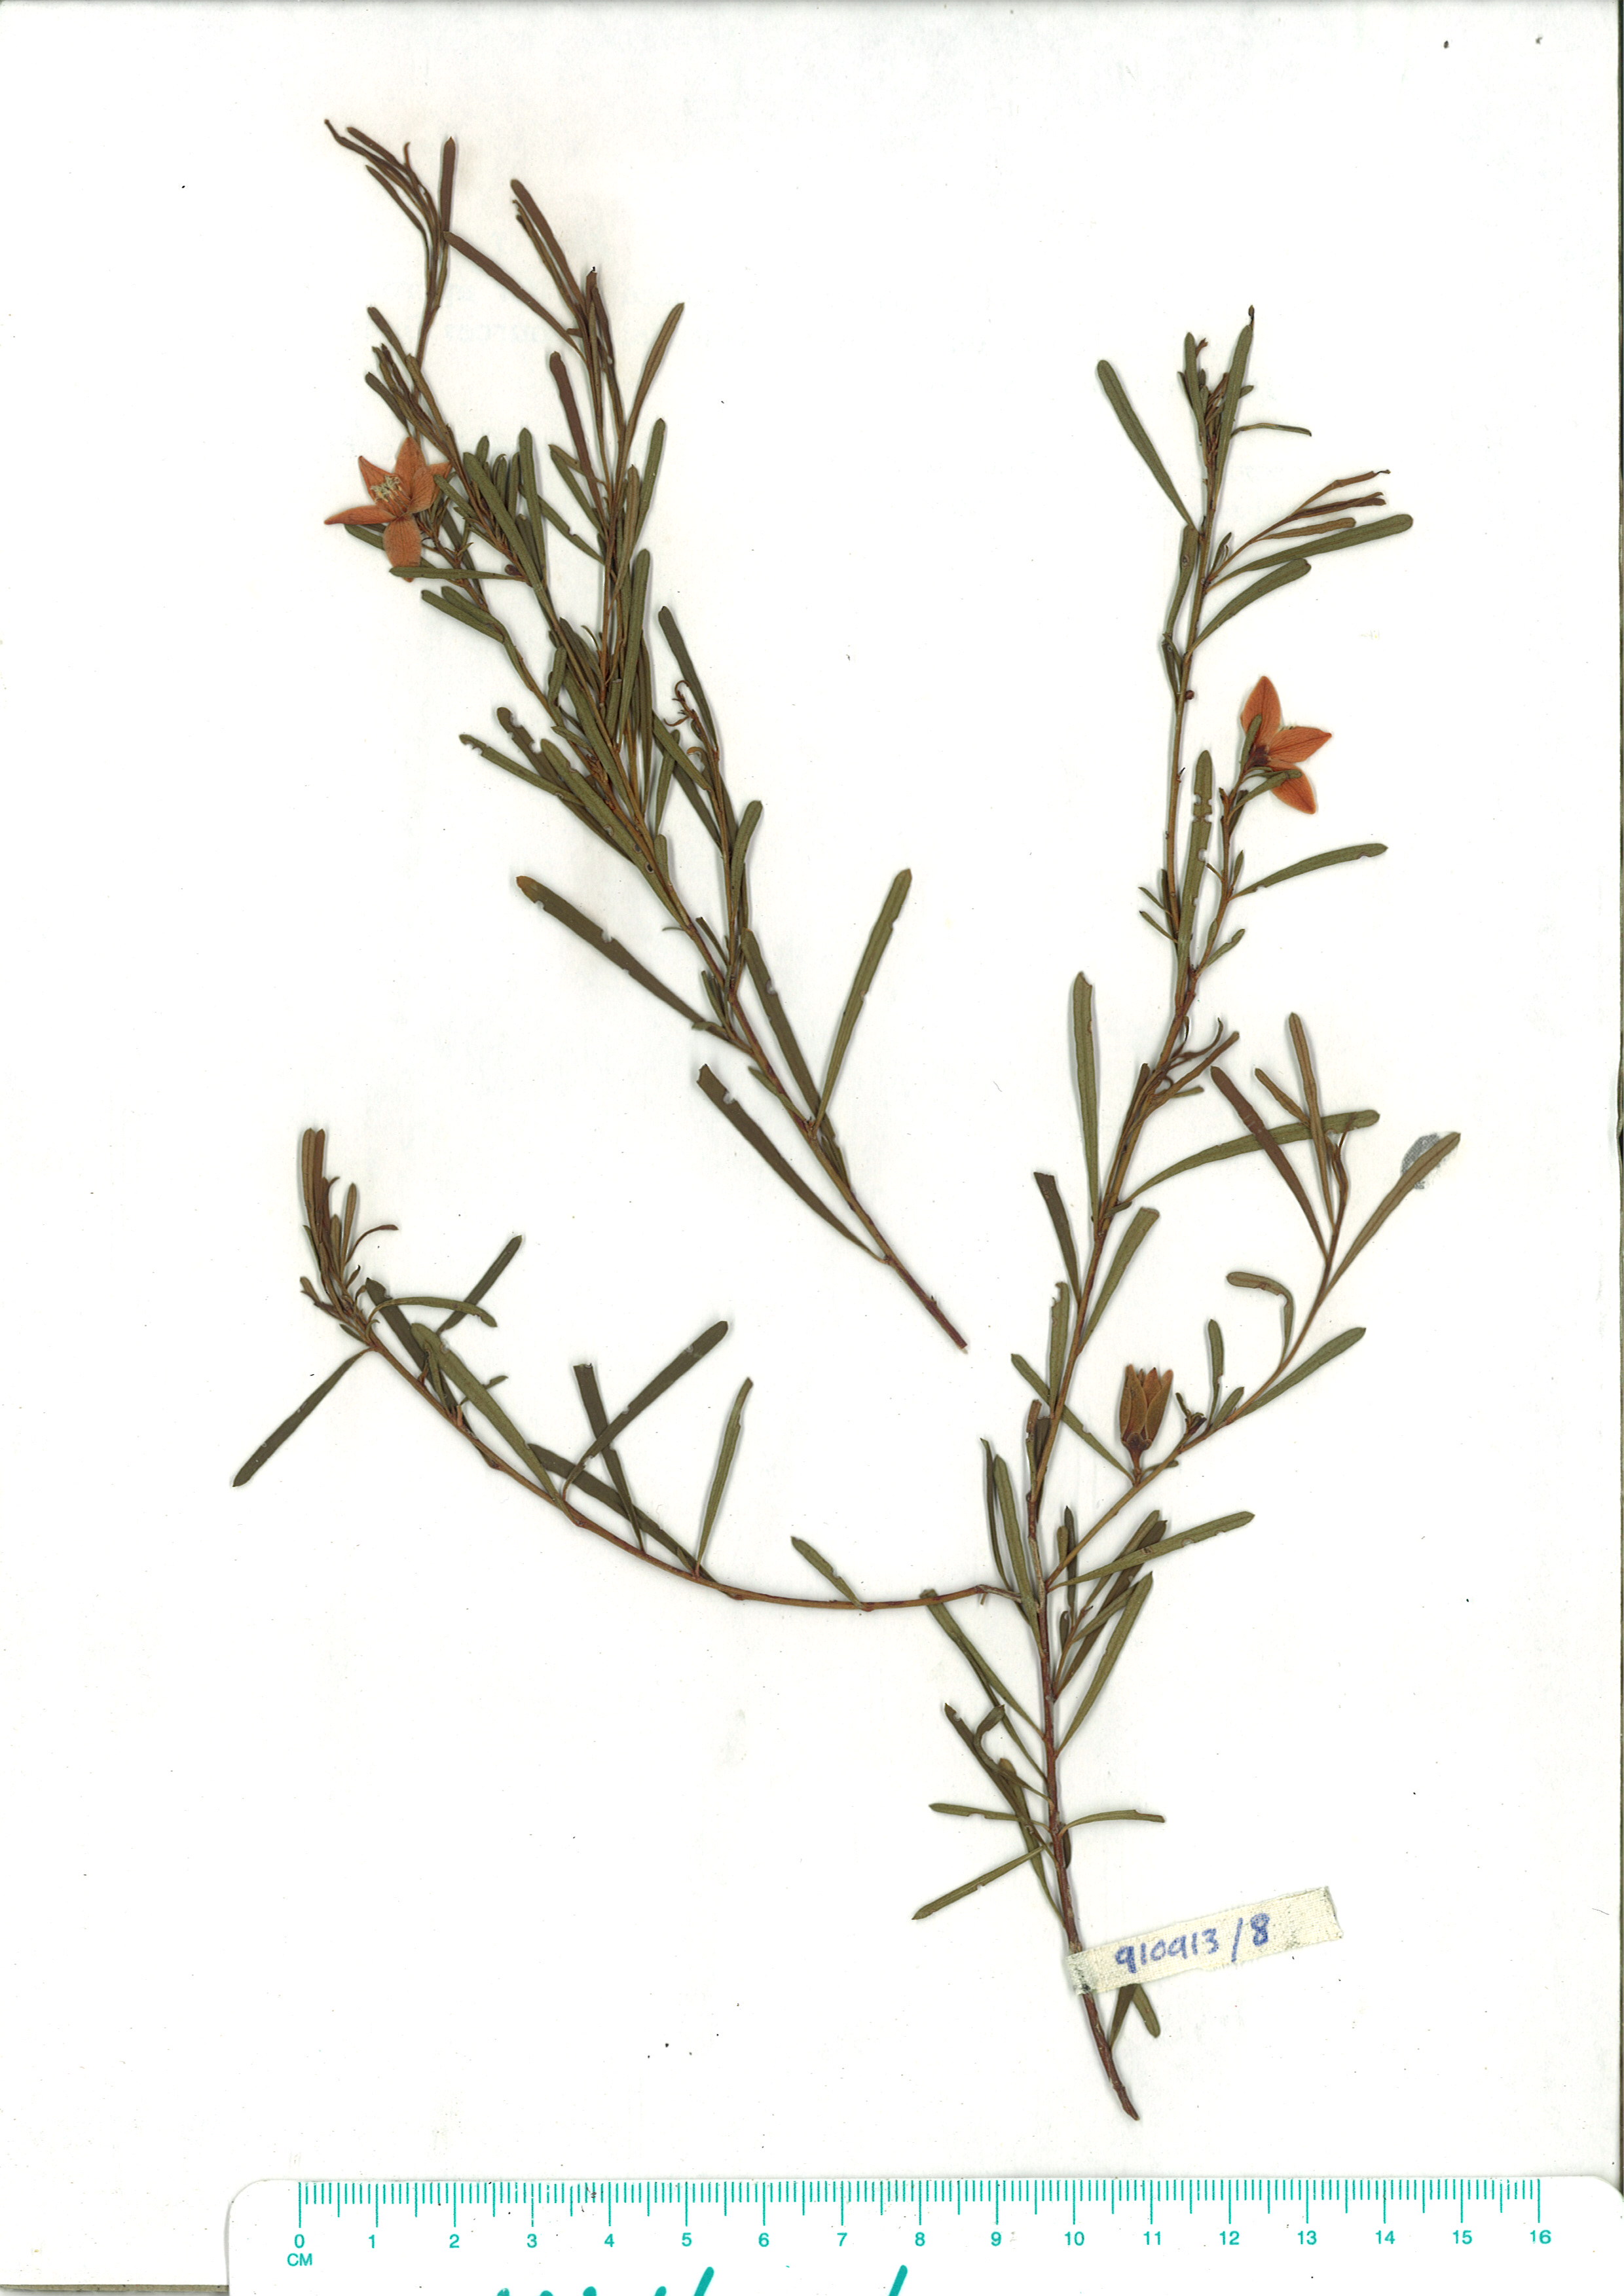 Scanned herbarium image of Crowea exalata